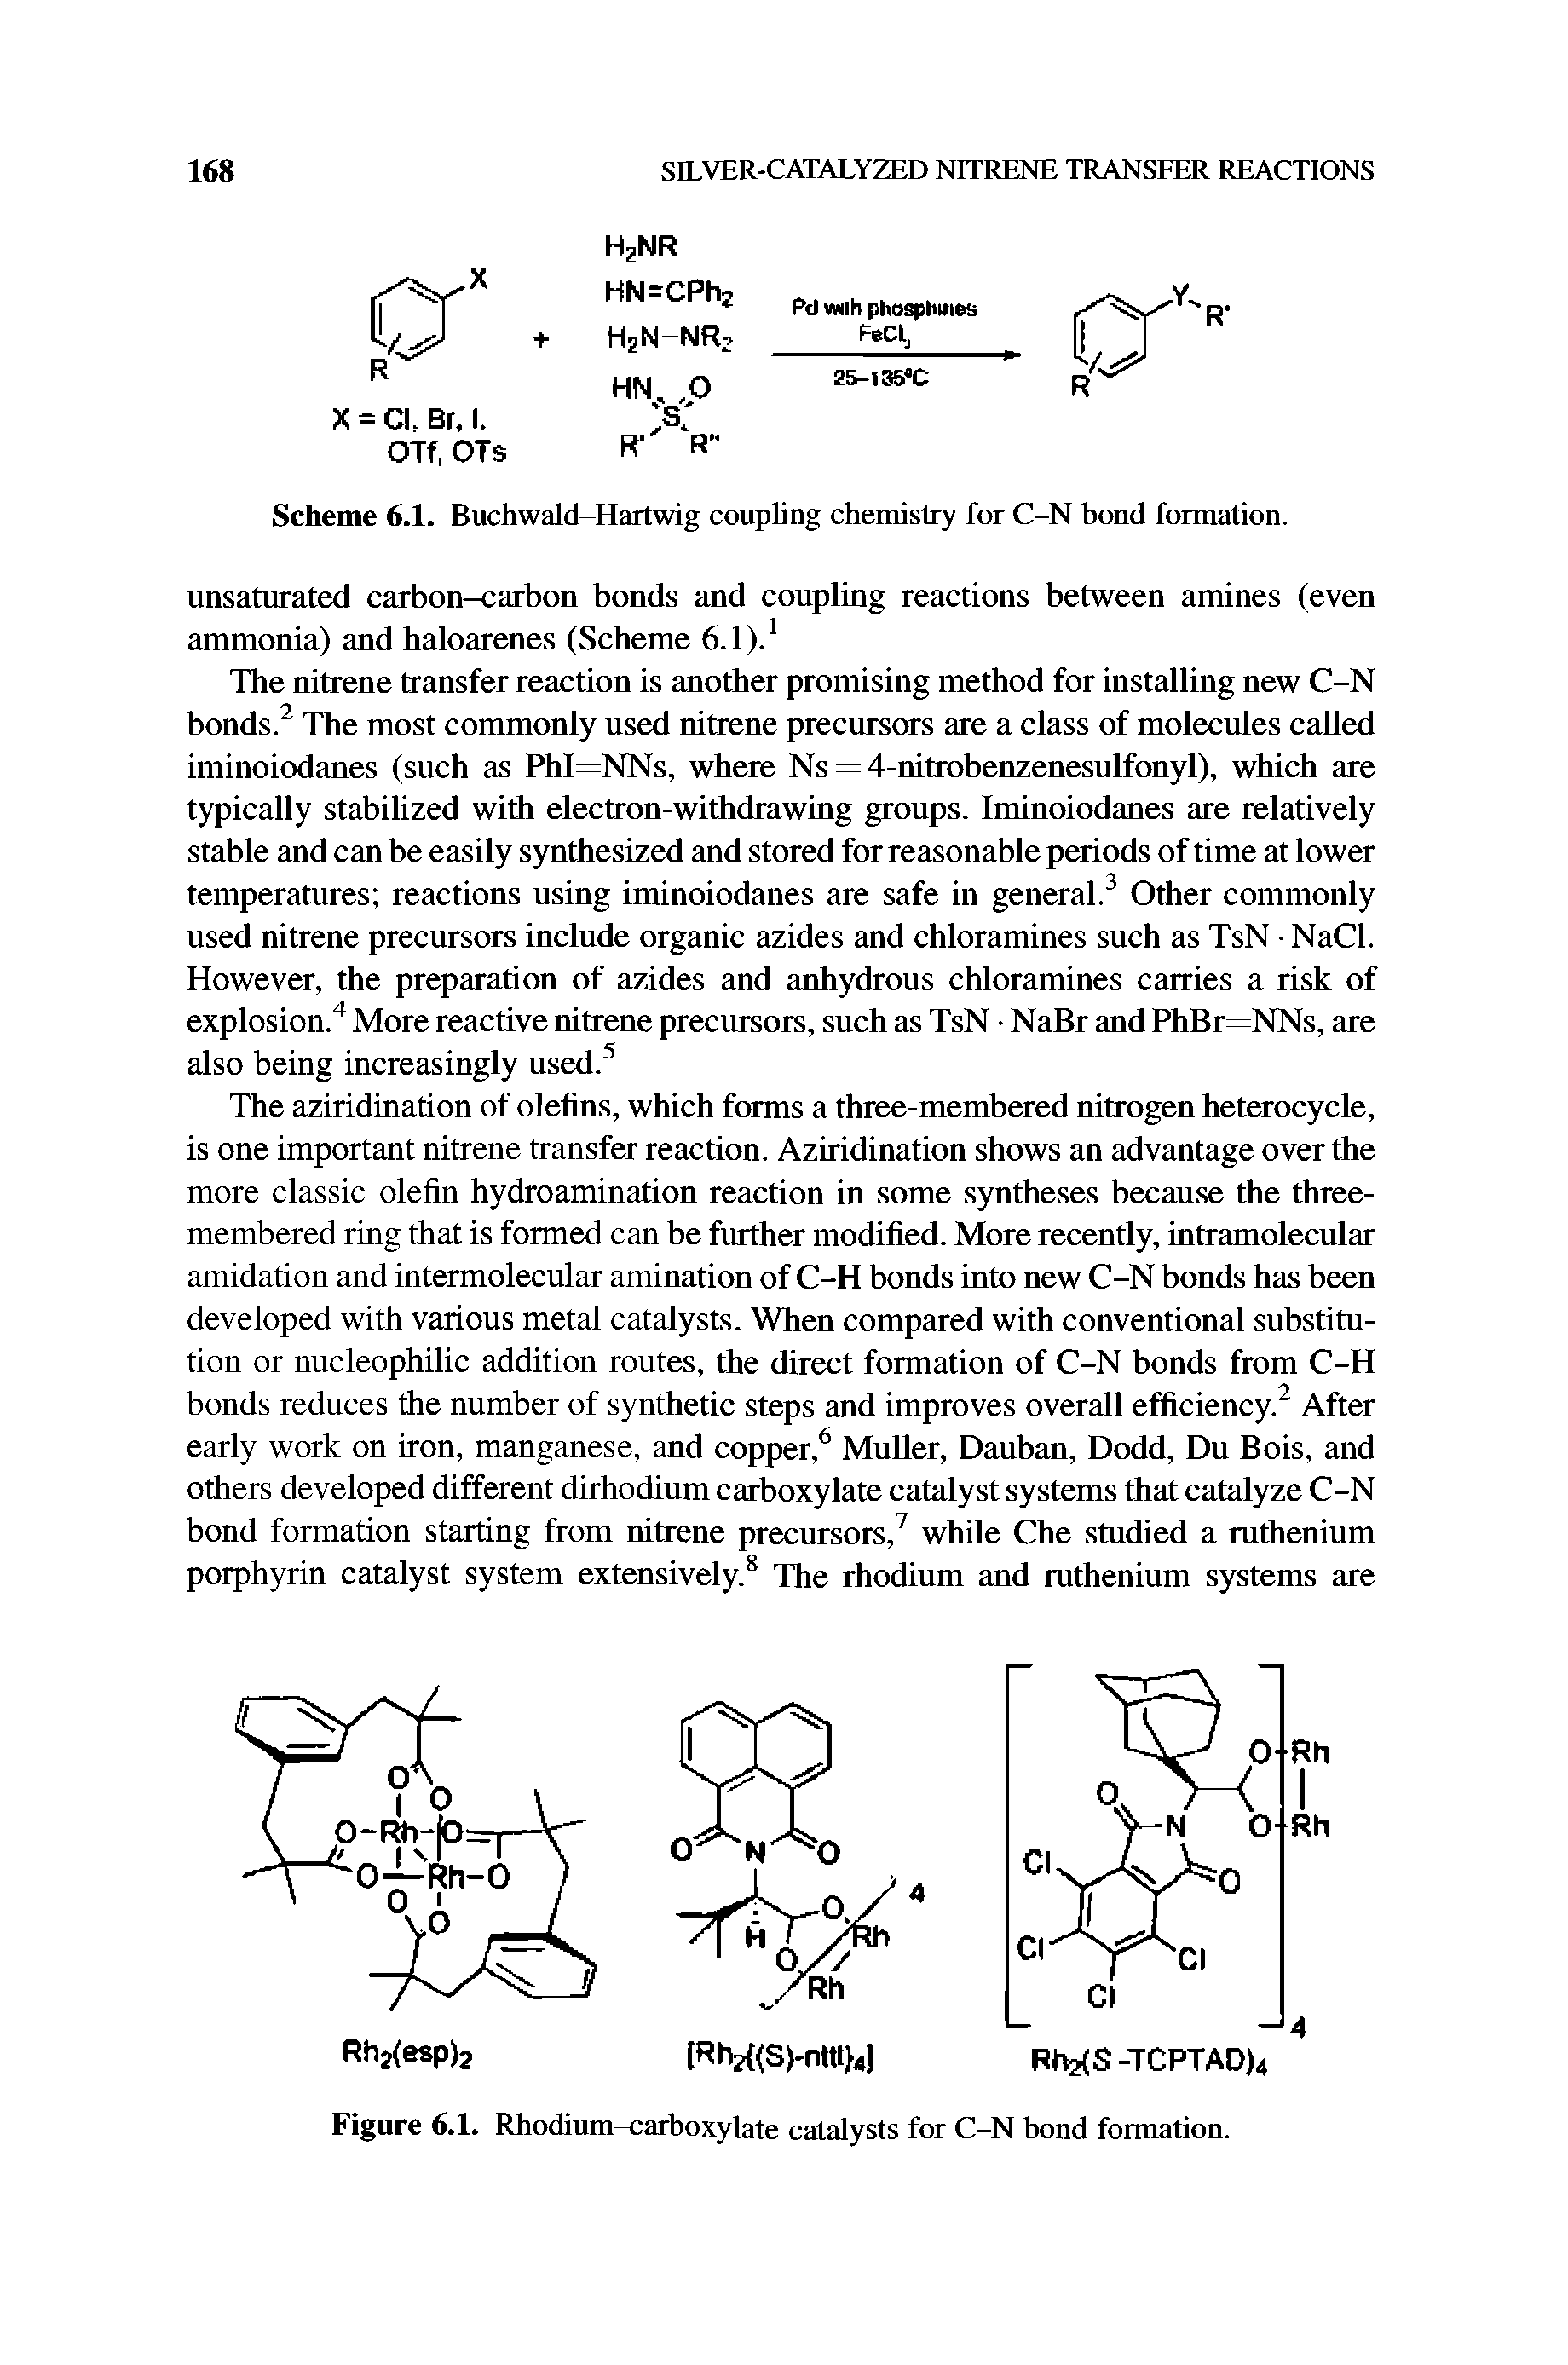 Scheme 6.1. Buchwald-Hartwig coupling chemistry for C-N bond formation.